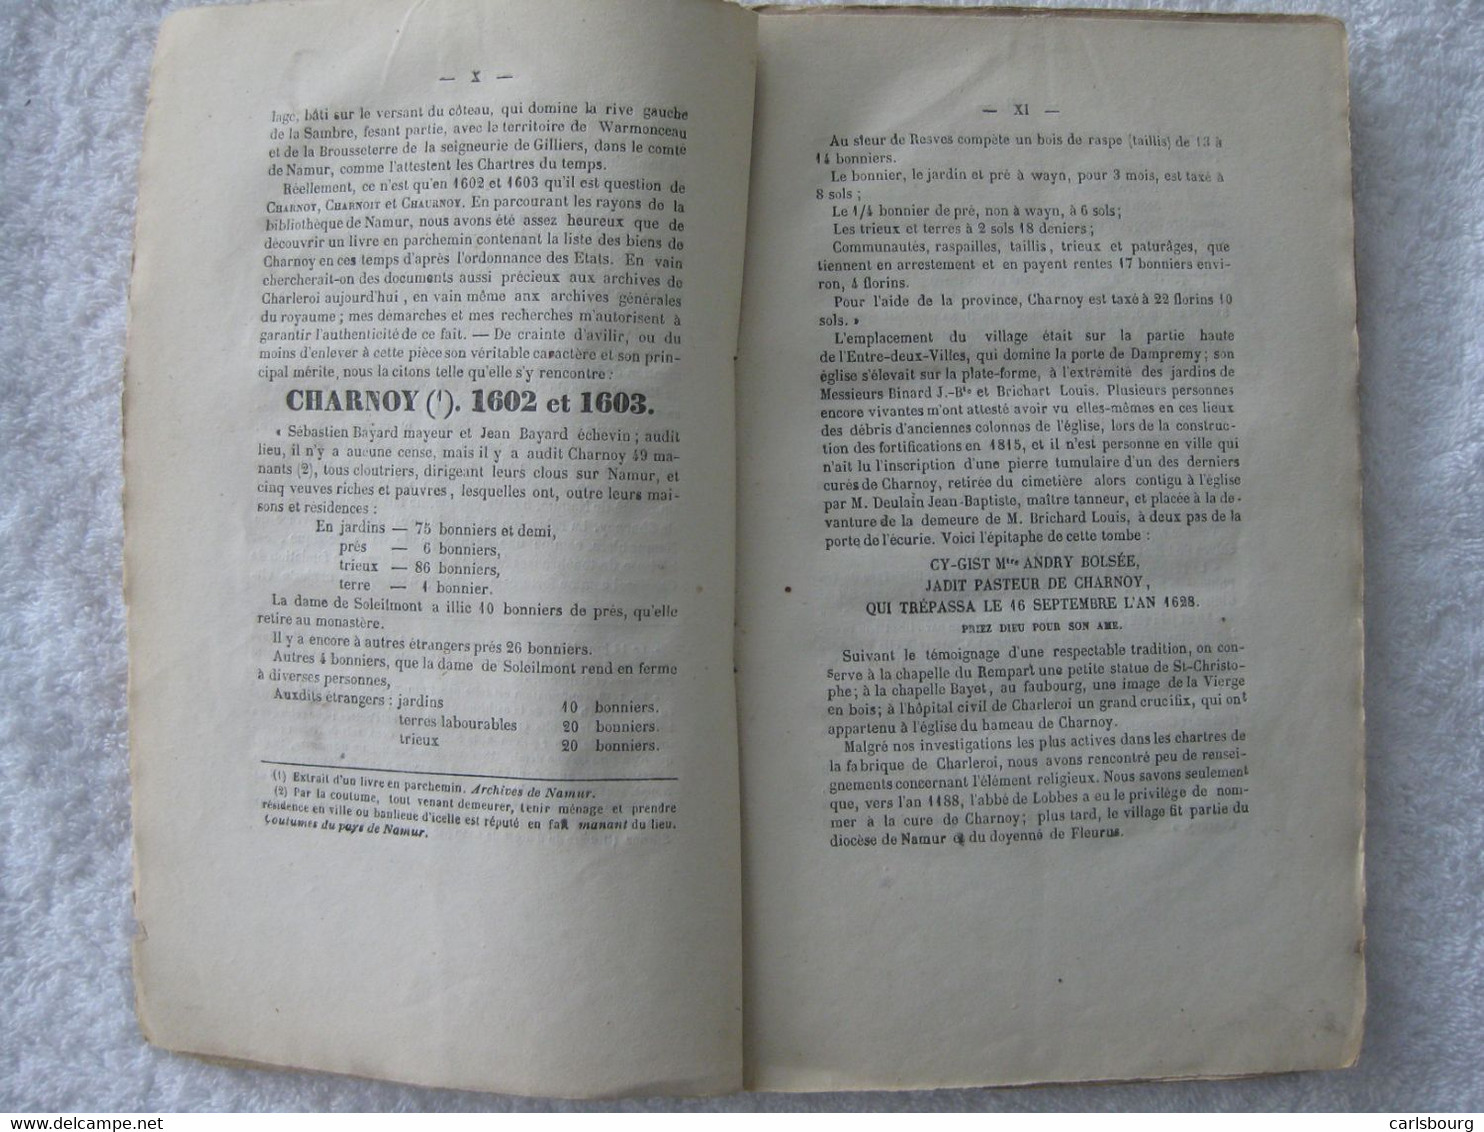 Charleroi – l’abbé baroudeur Aristide Piérard - EO 1855 – rare, curiosa et censuré !